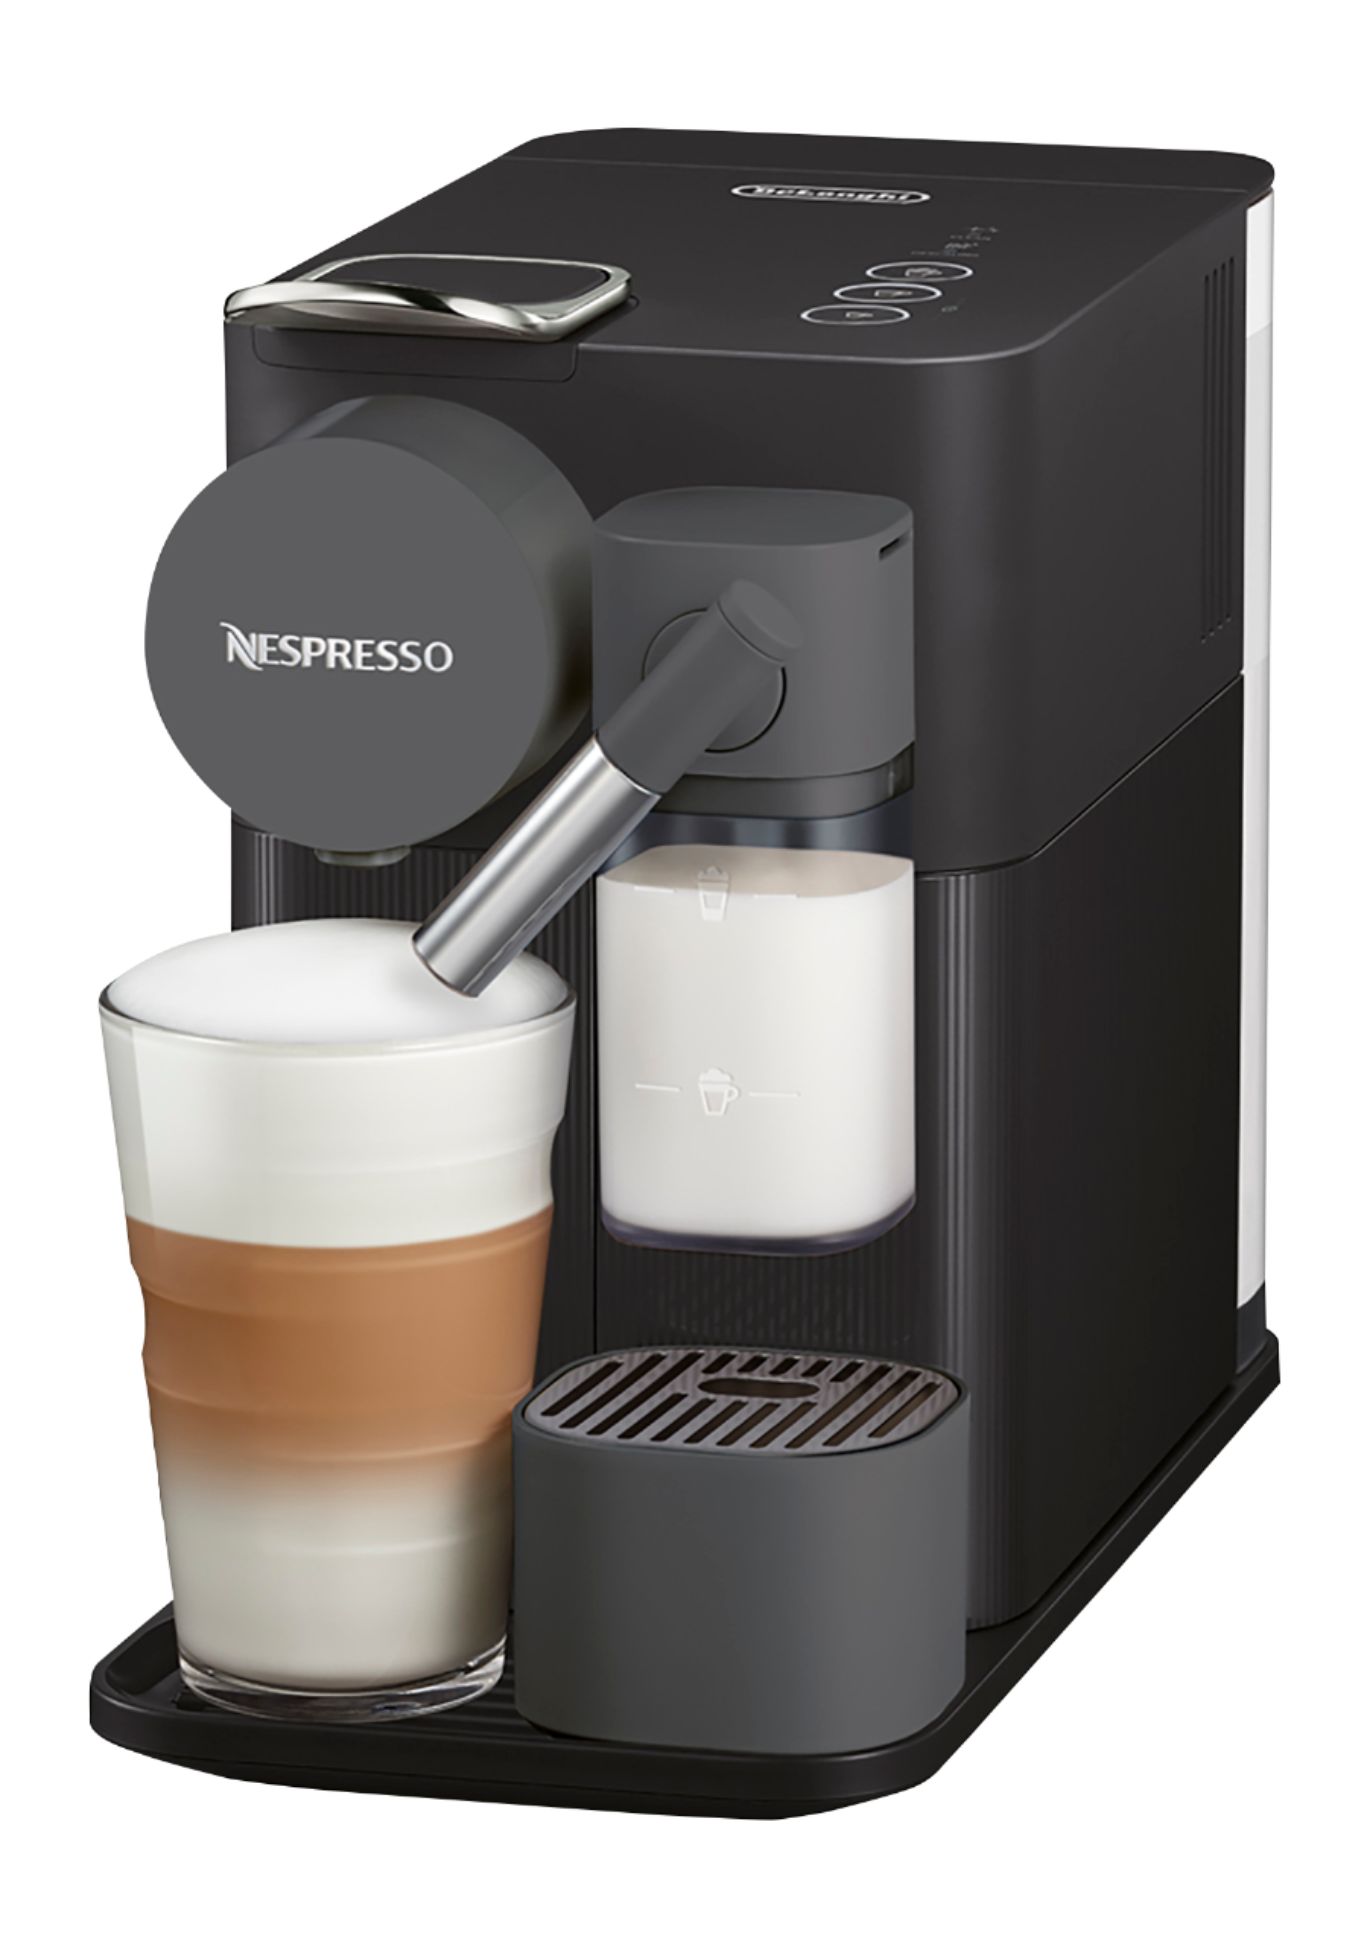 nespresso coffee machine with milk frother